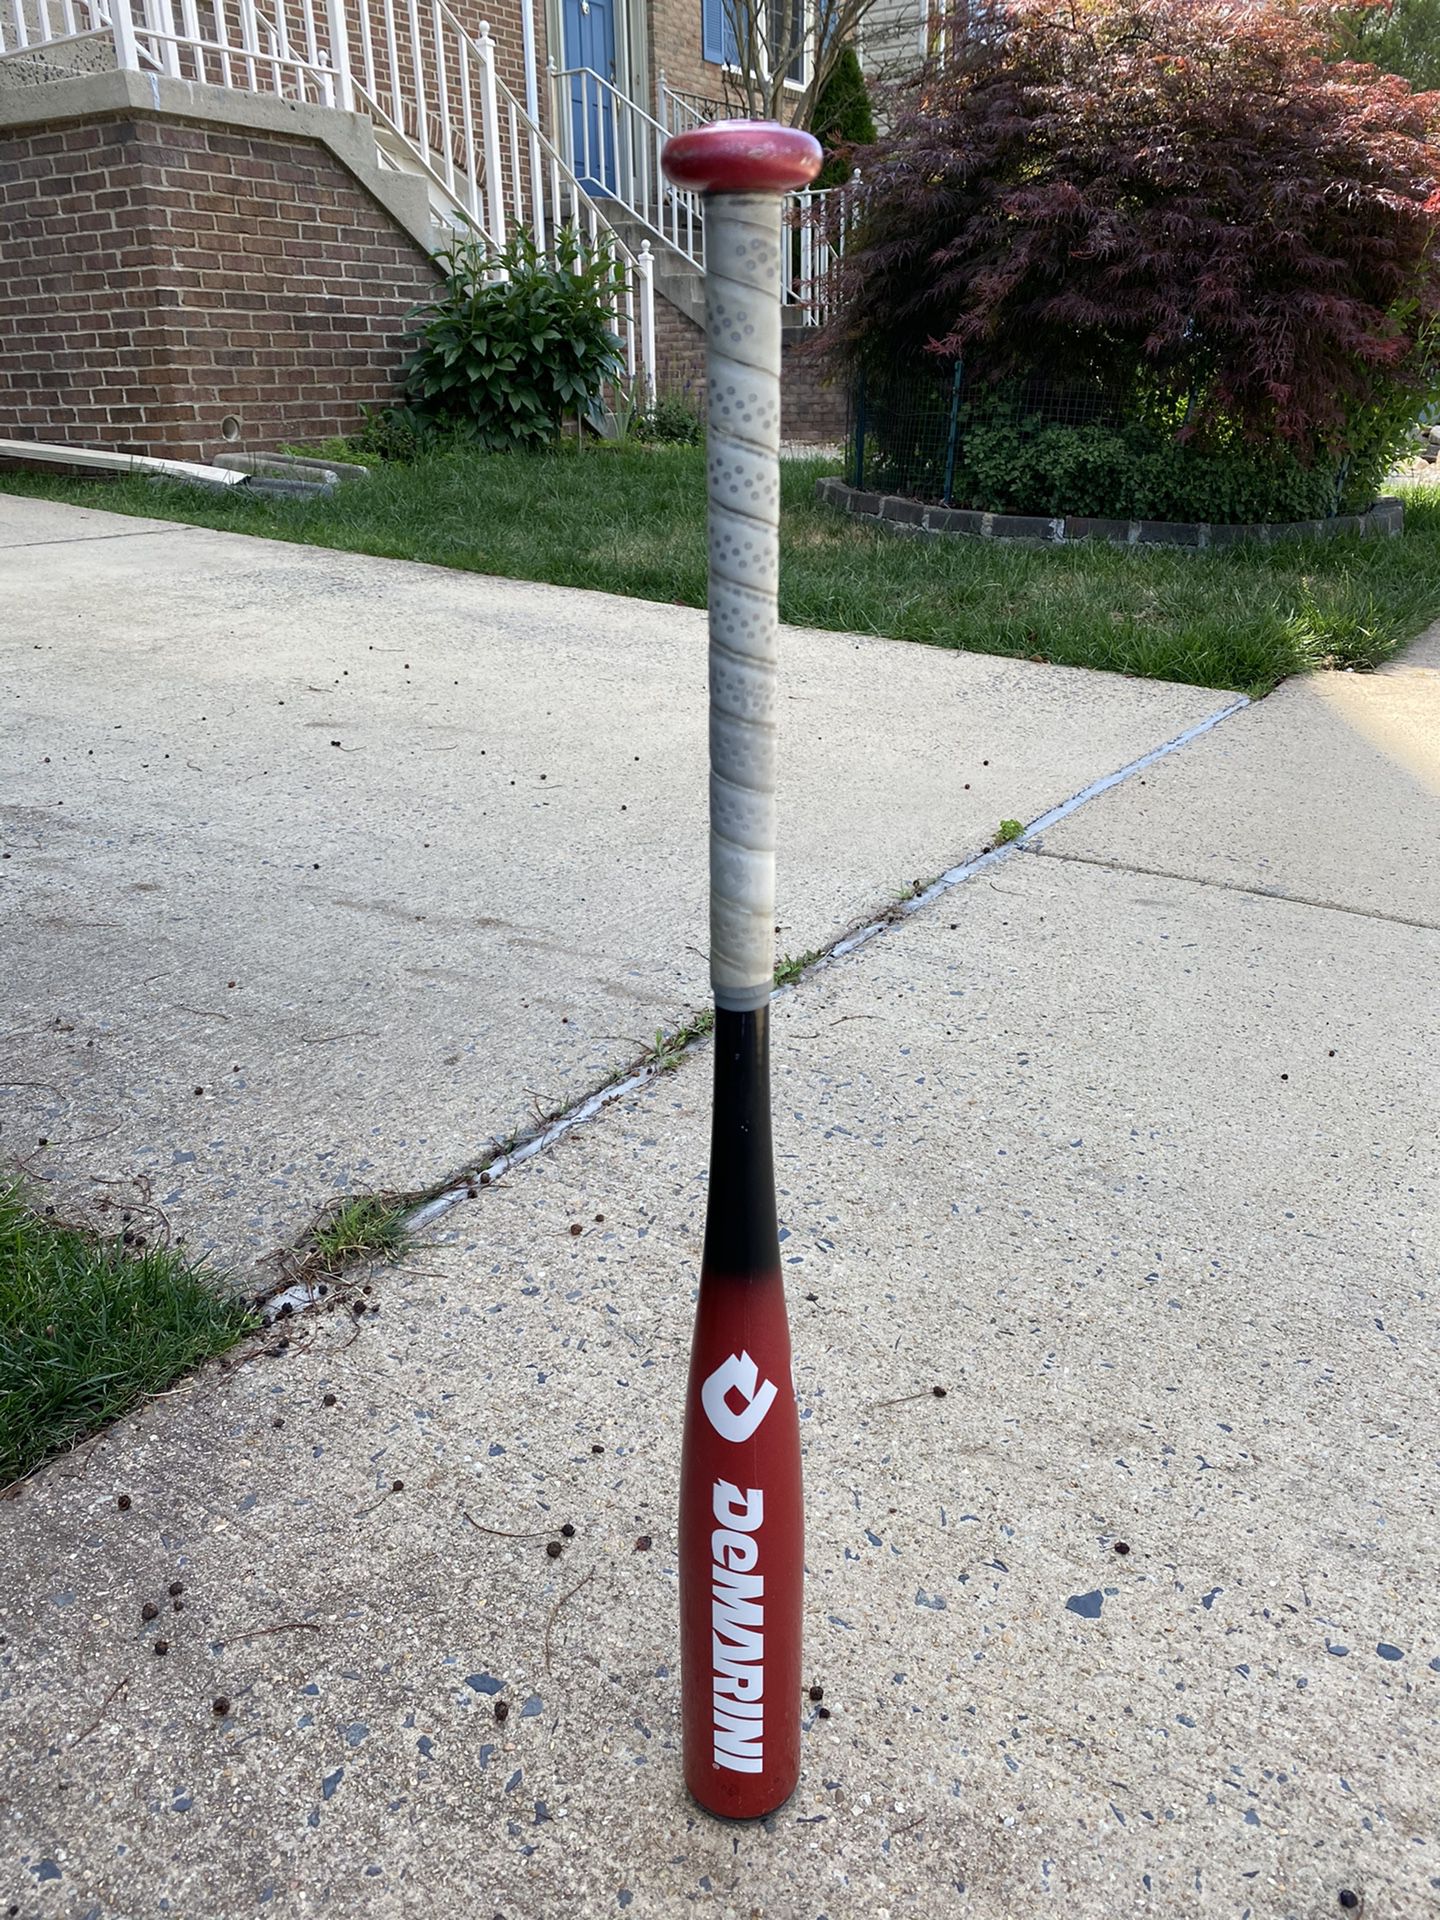 Dimarini baseball bat for kids 7-9 years old